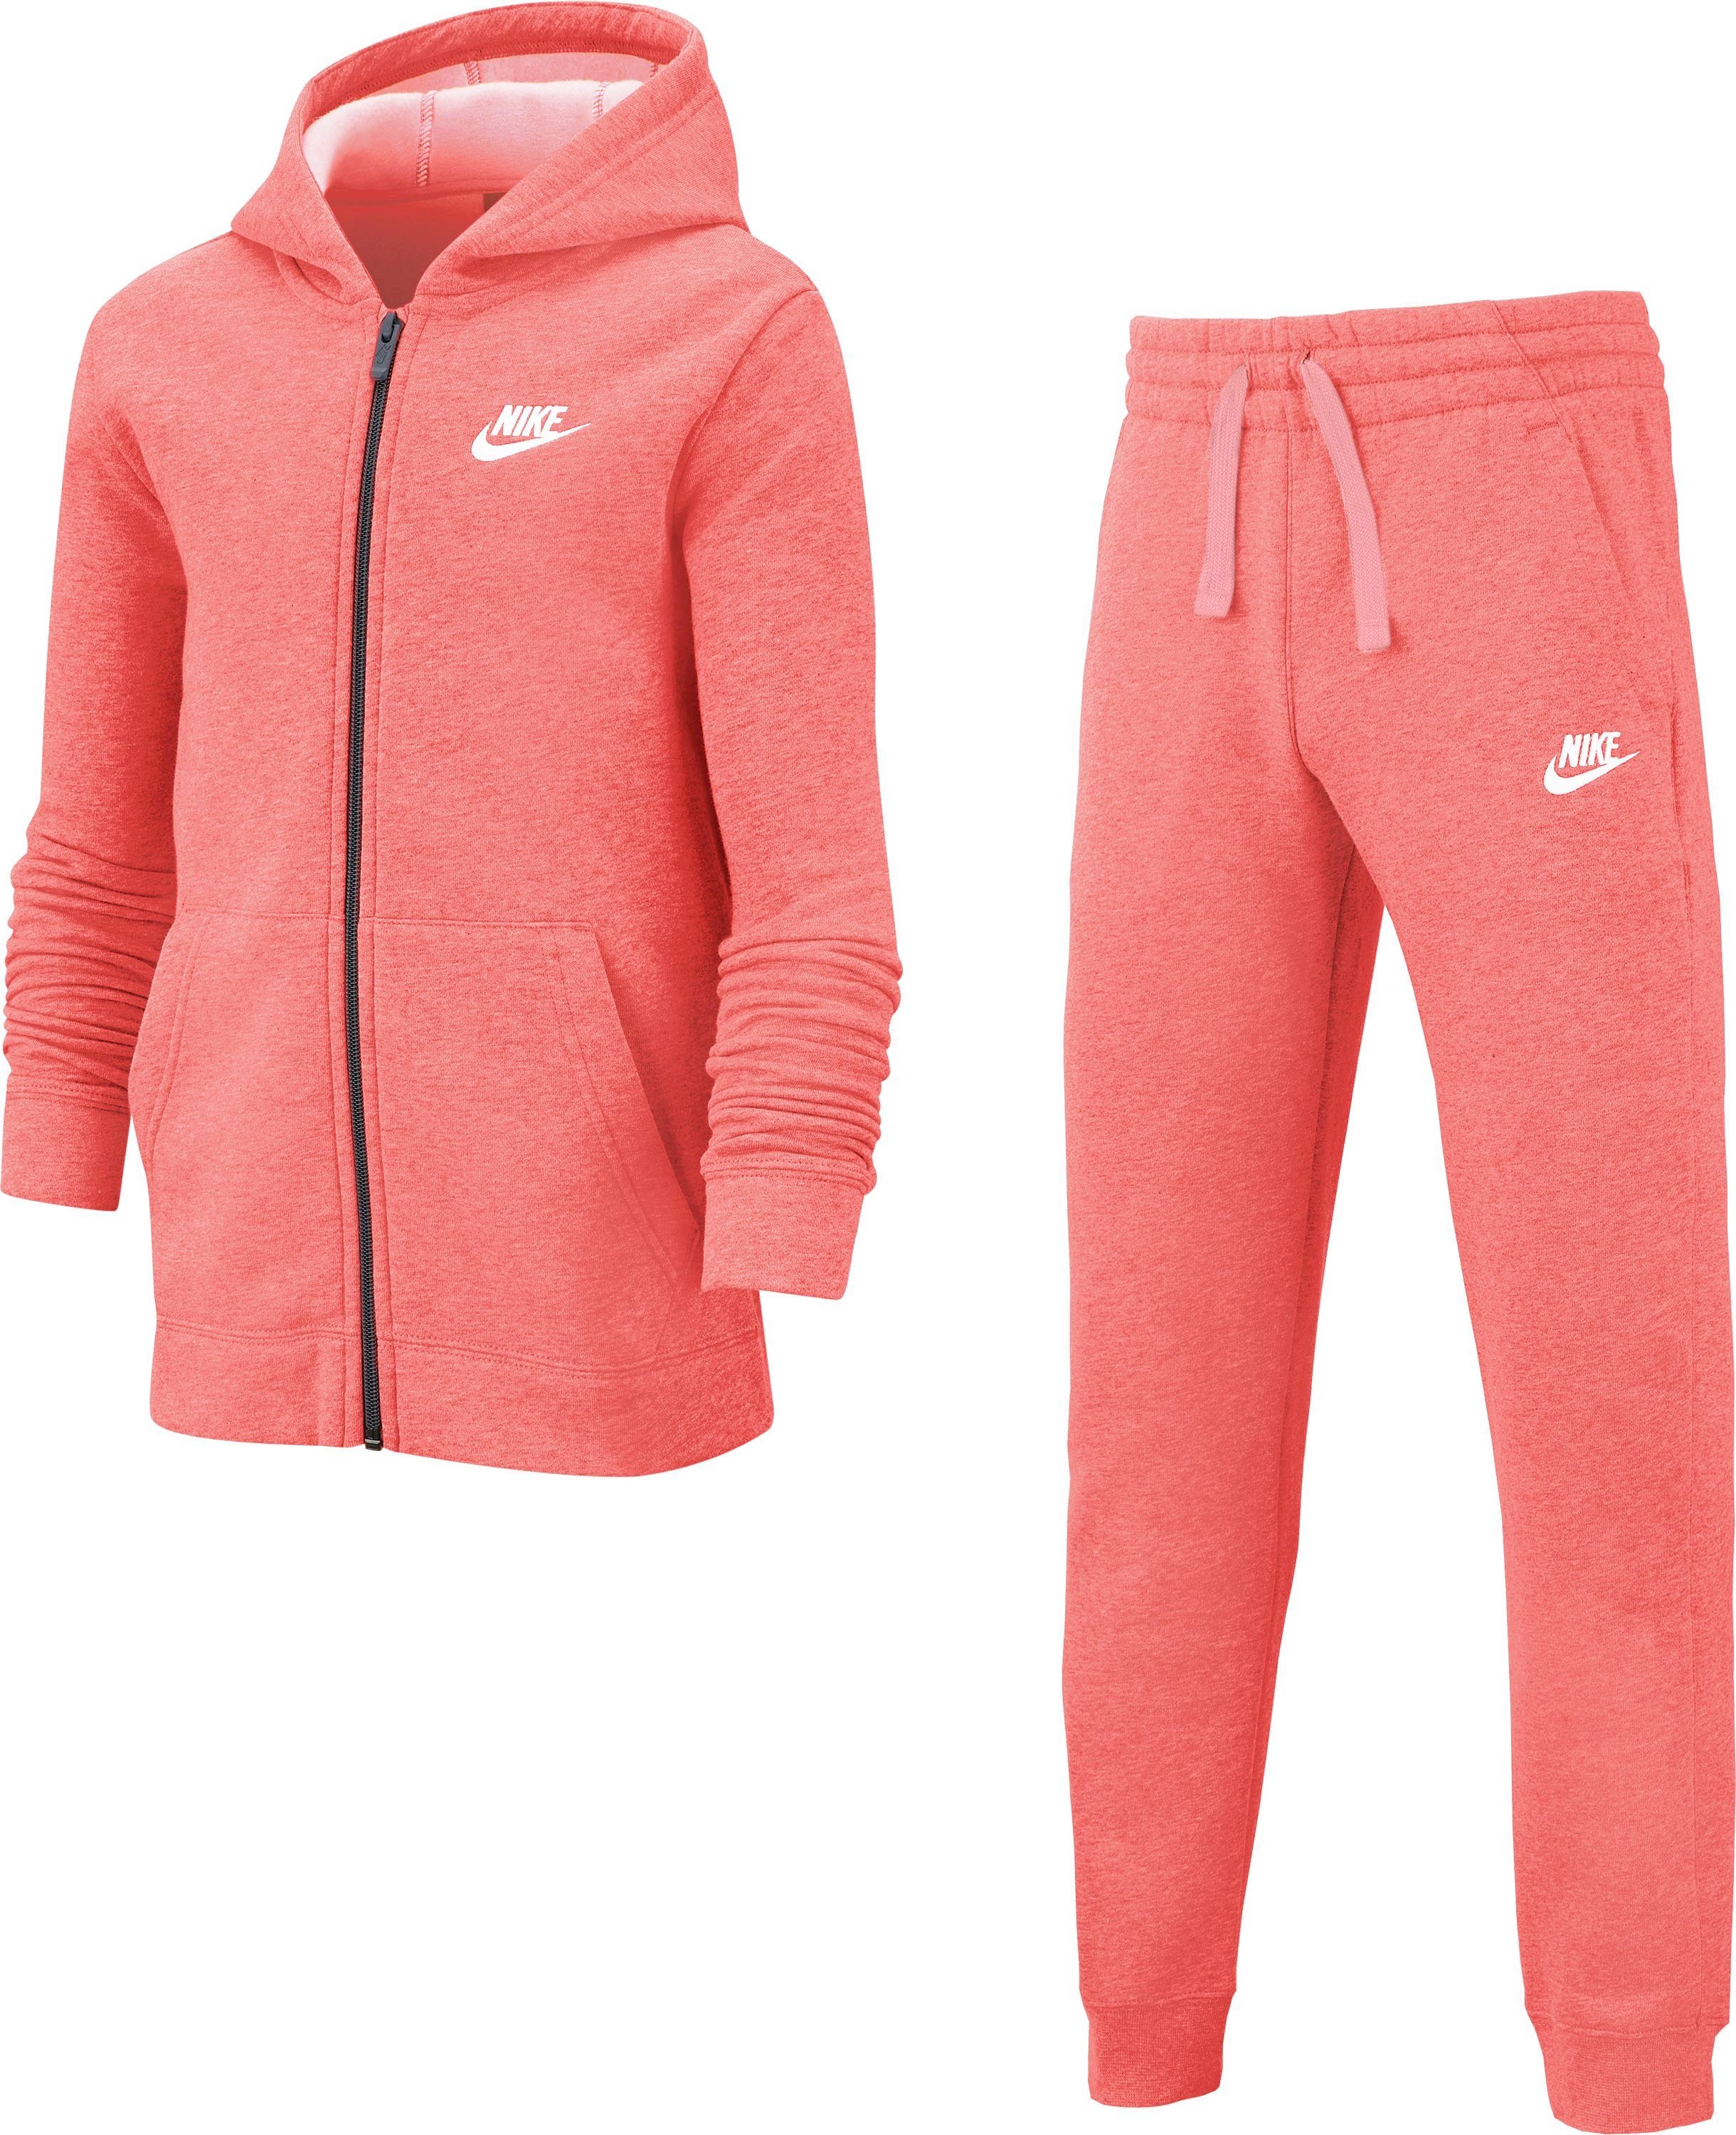 Kinder für NSW Jogginganzug Sportswear Nike 2-tlg), (Set, CORE koralle